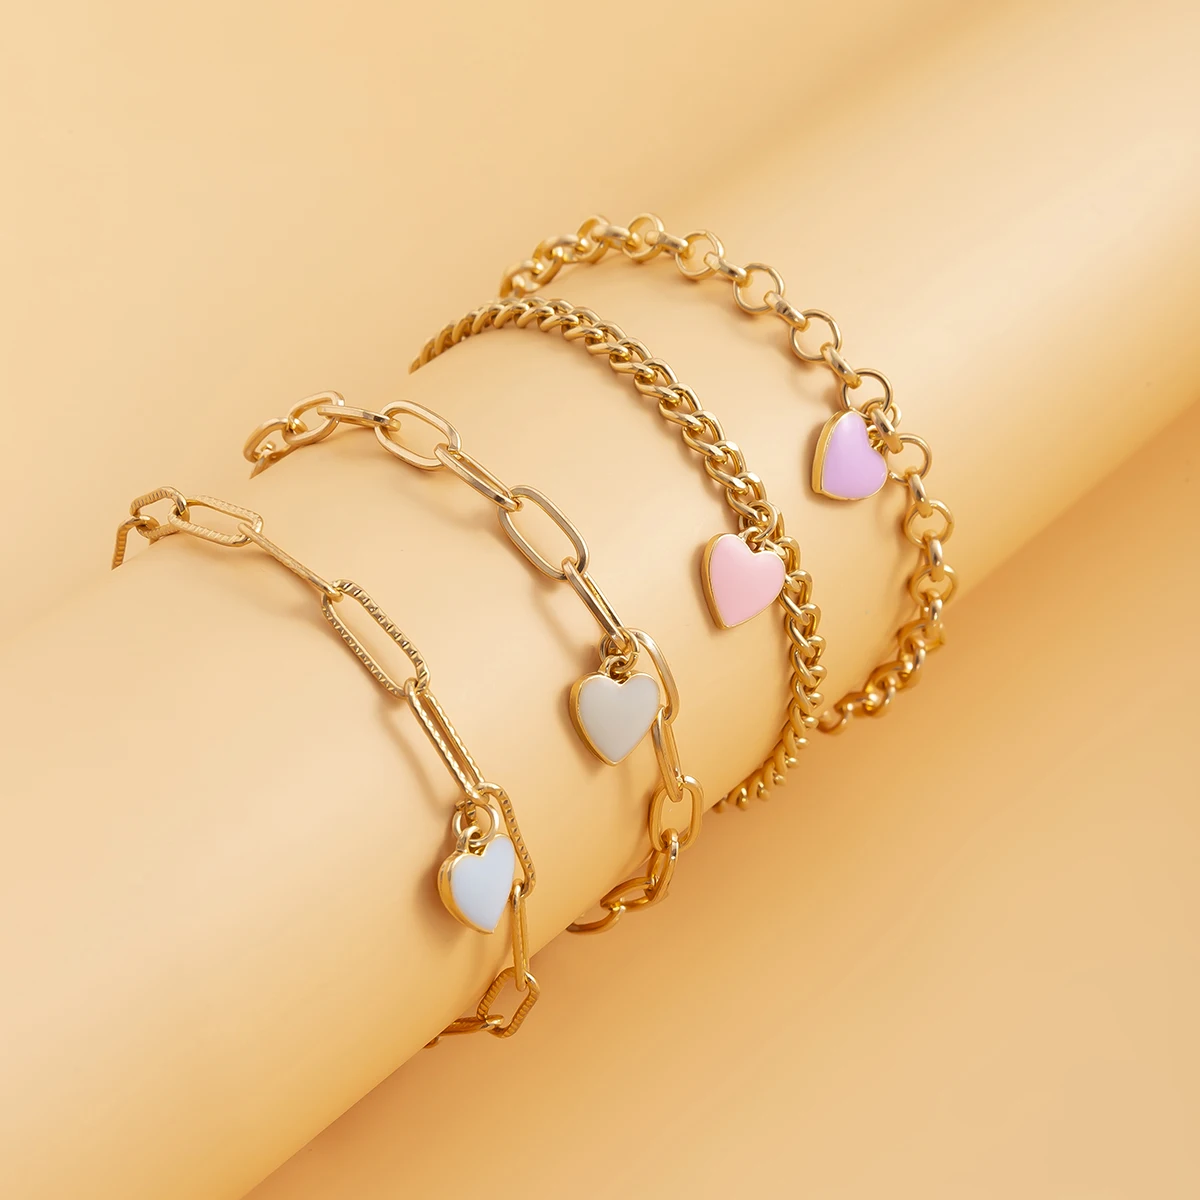 

KunJoe 4pcs/set Layered Gold Color Link Chain Heart Shape Charms Pendant Bracelets for Women Men Jewelry Retro Punk Gothic Gifts